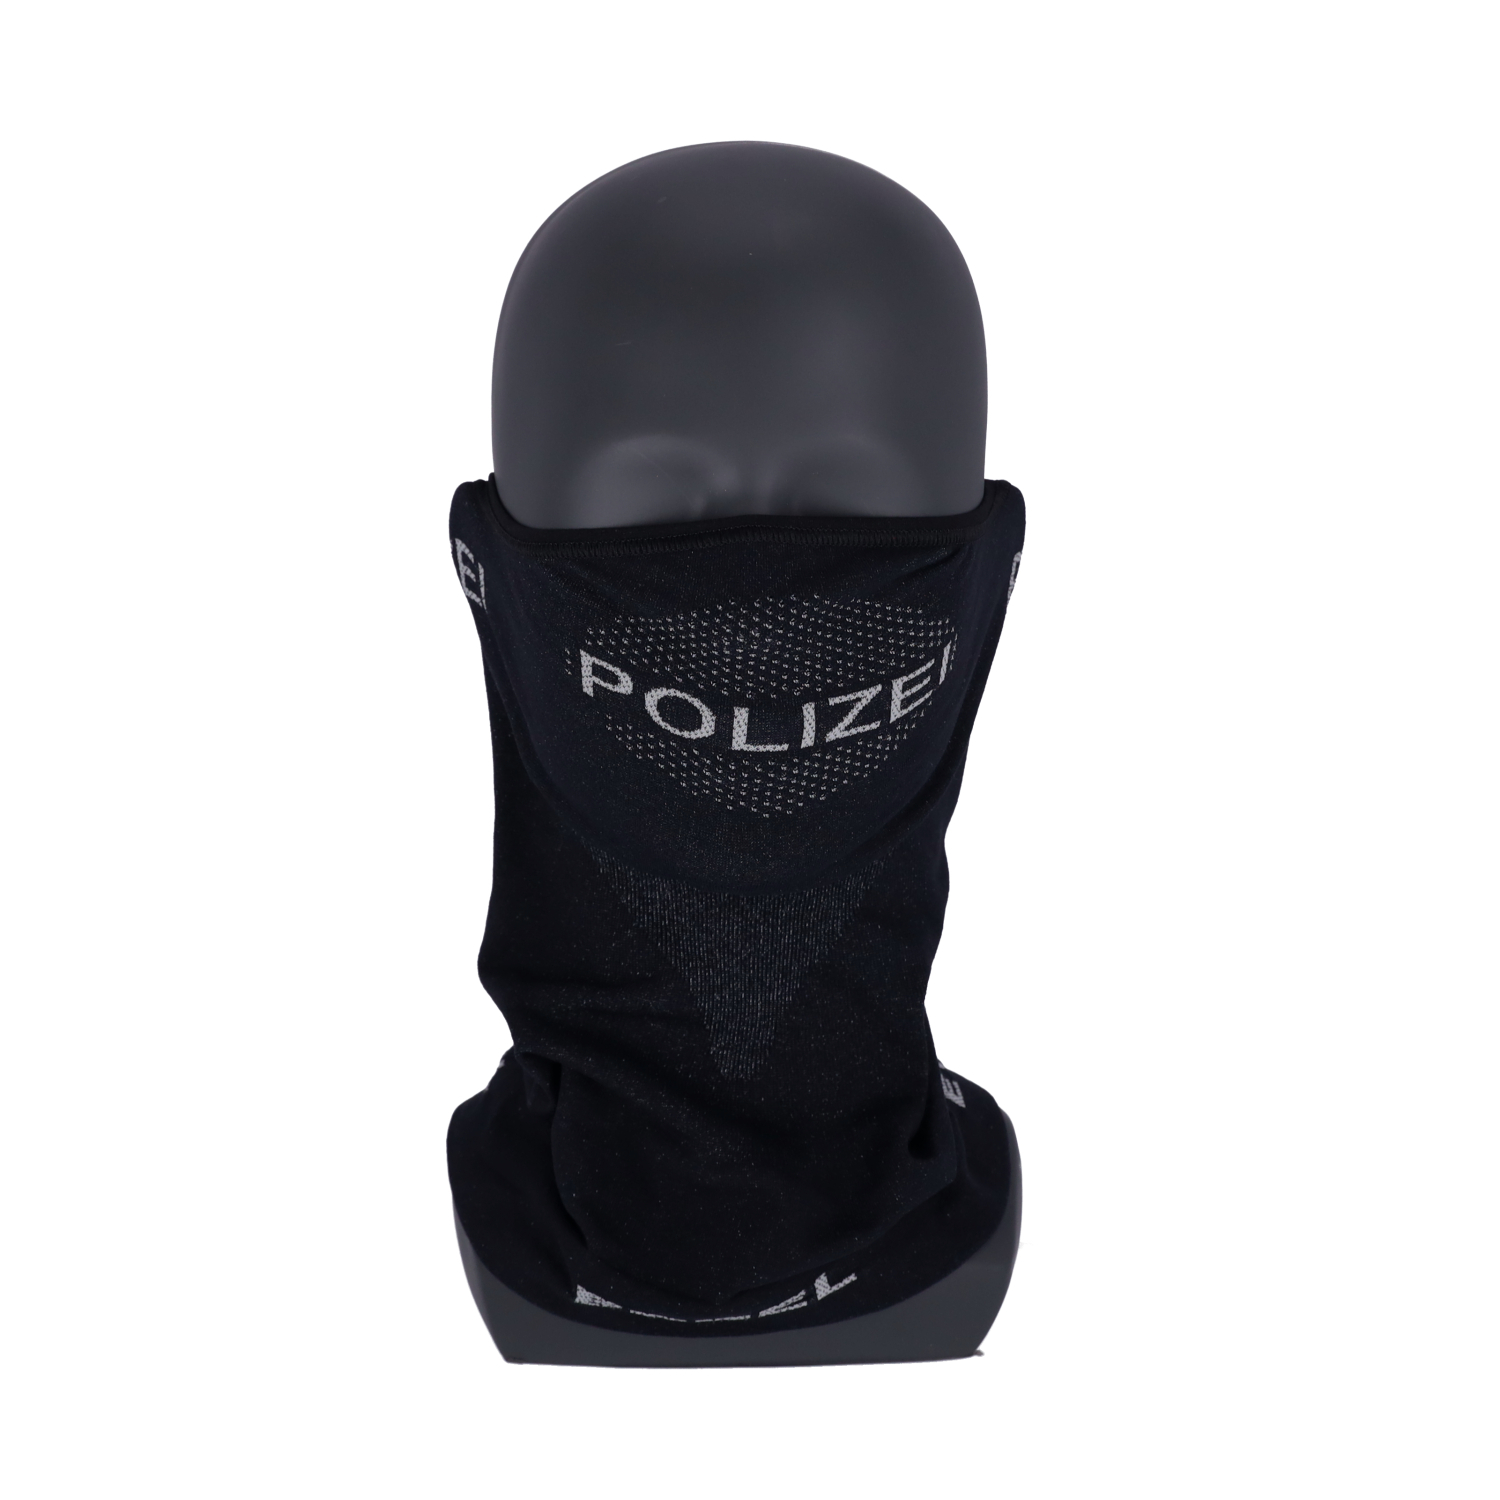 ETZEL® Tactical Face Shield „POLIZEI“ schwarz, universal